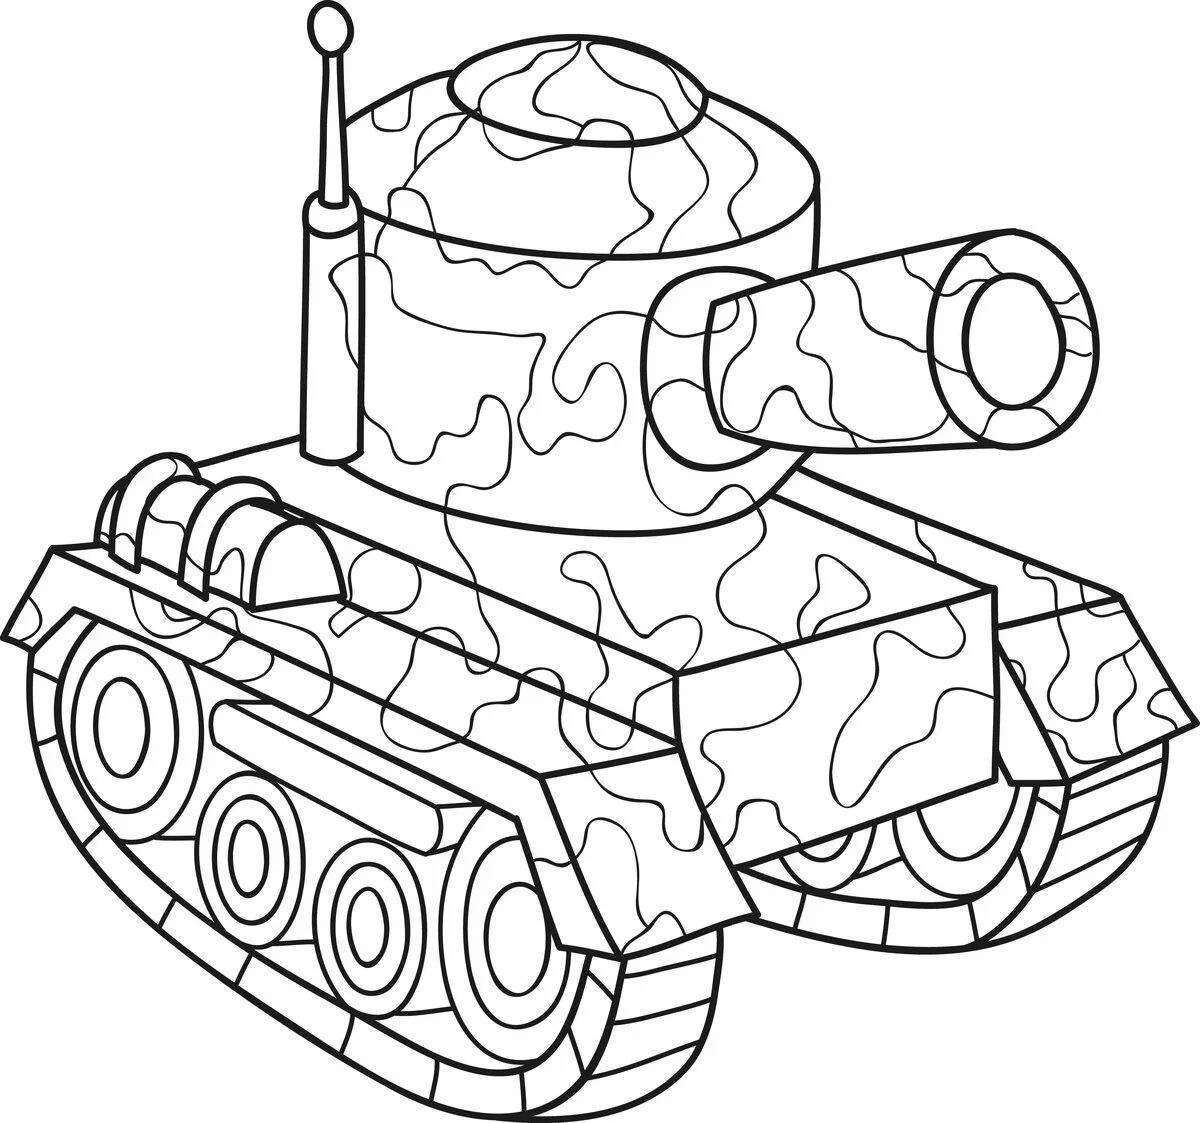 Захватывающая мультяшная раскраска танк для детей